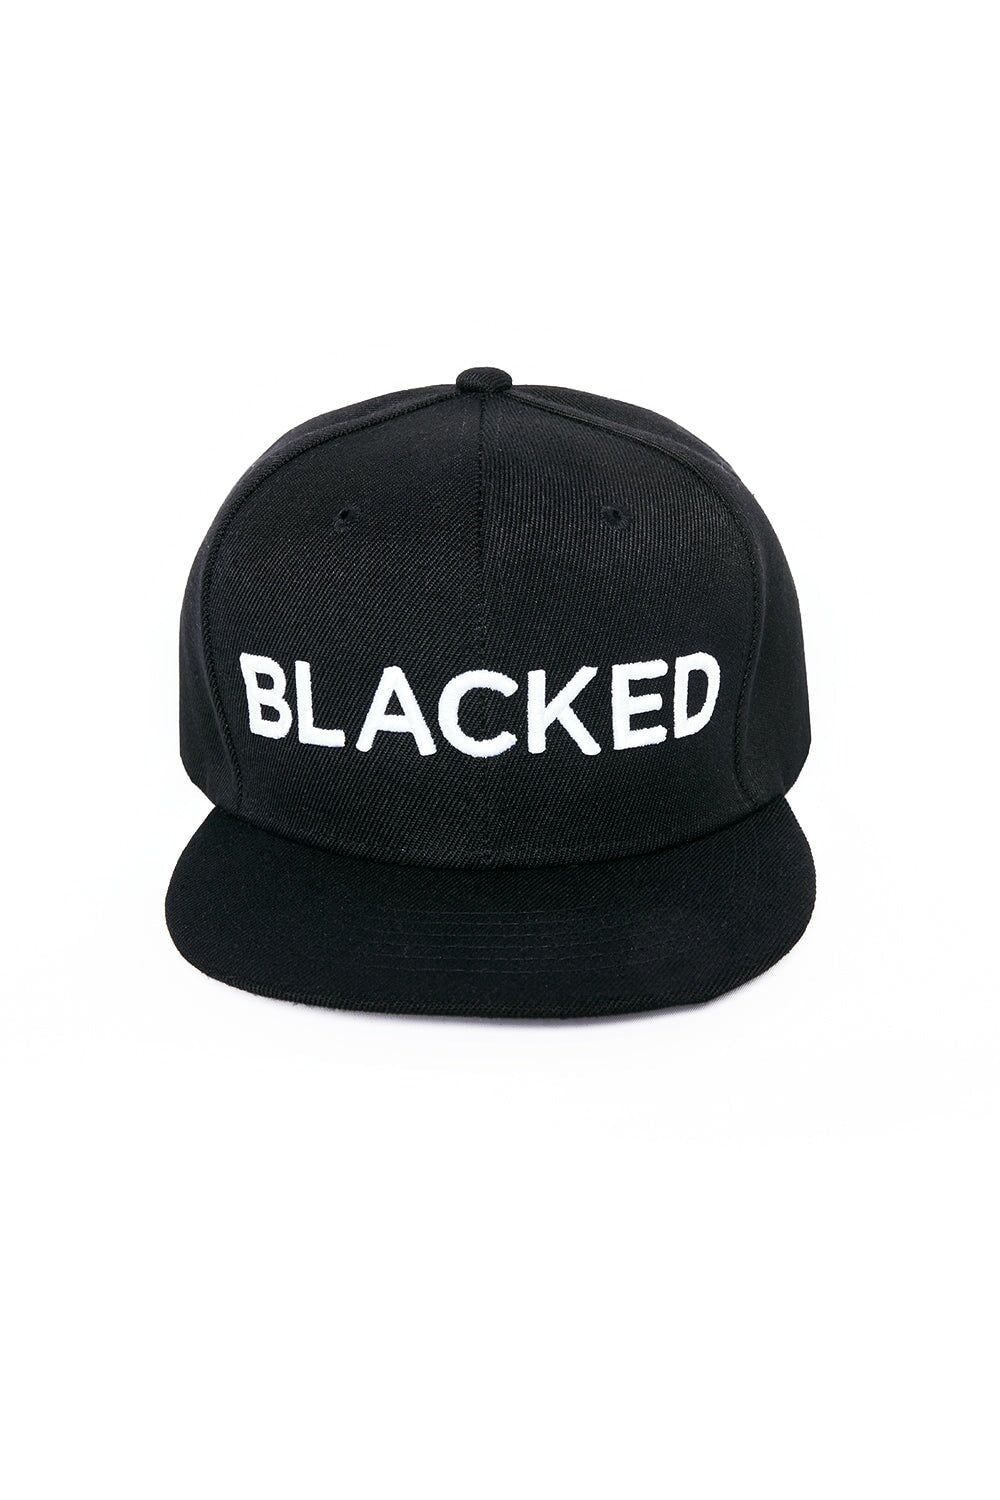 Blacked Snap Back  VIXEN - Vixen Brand